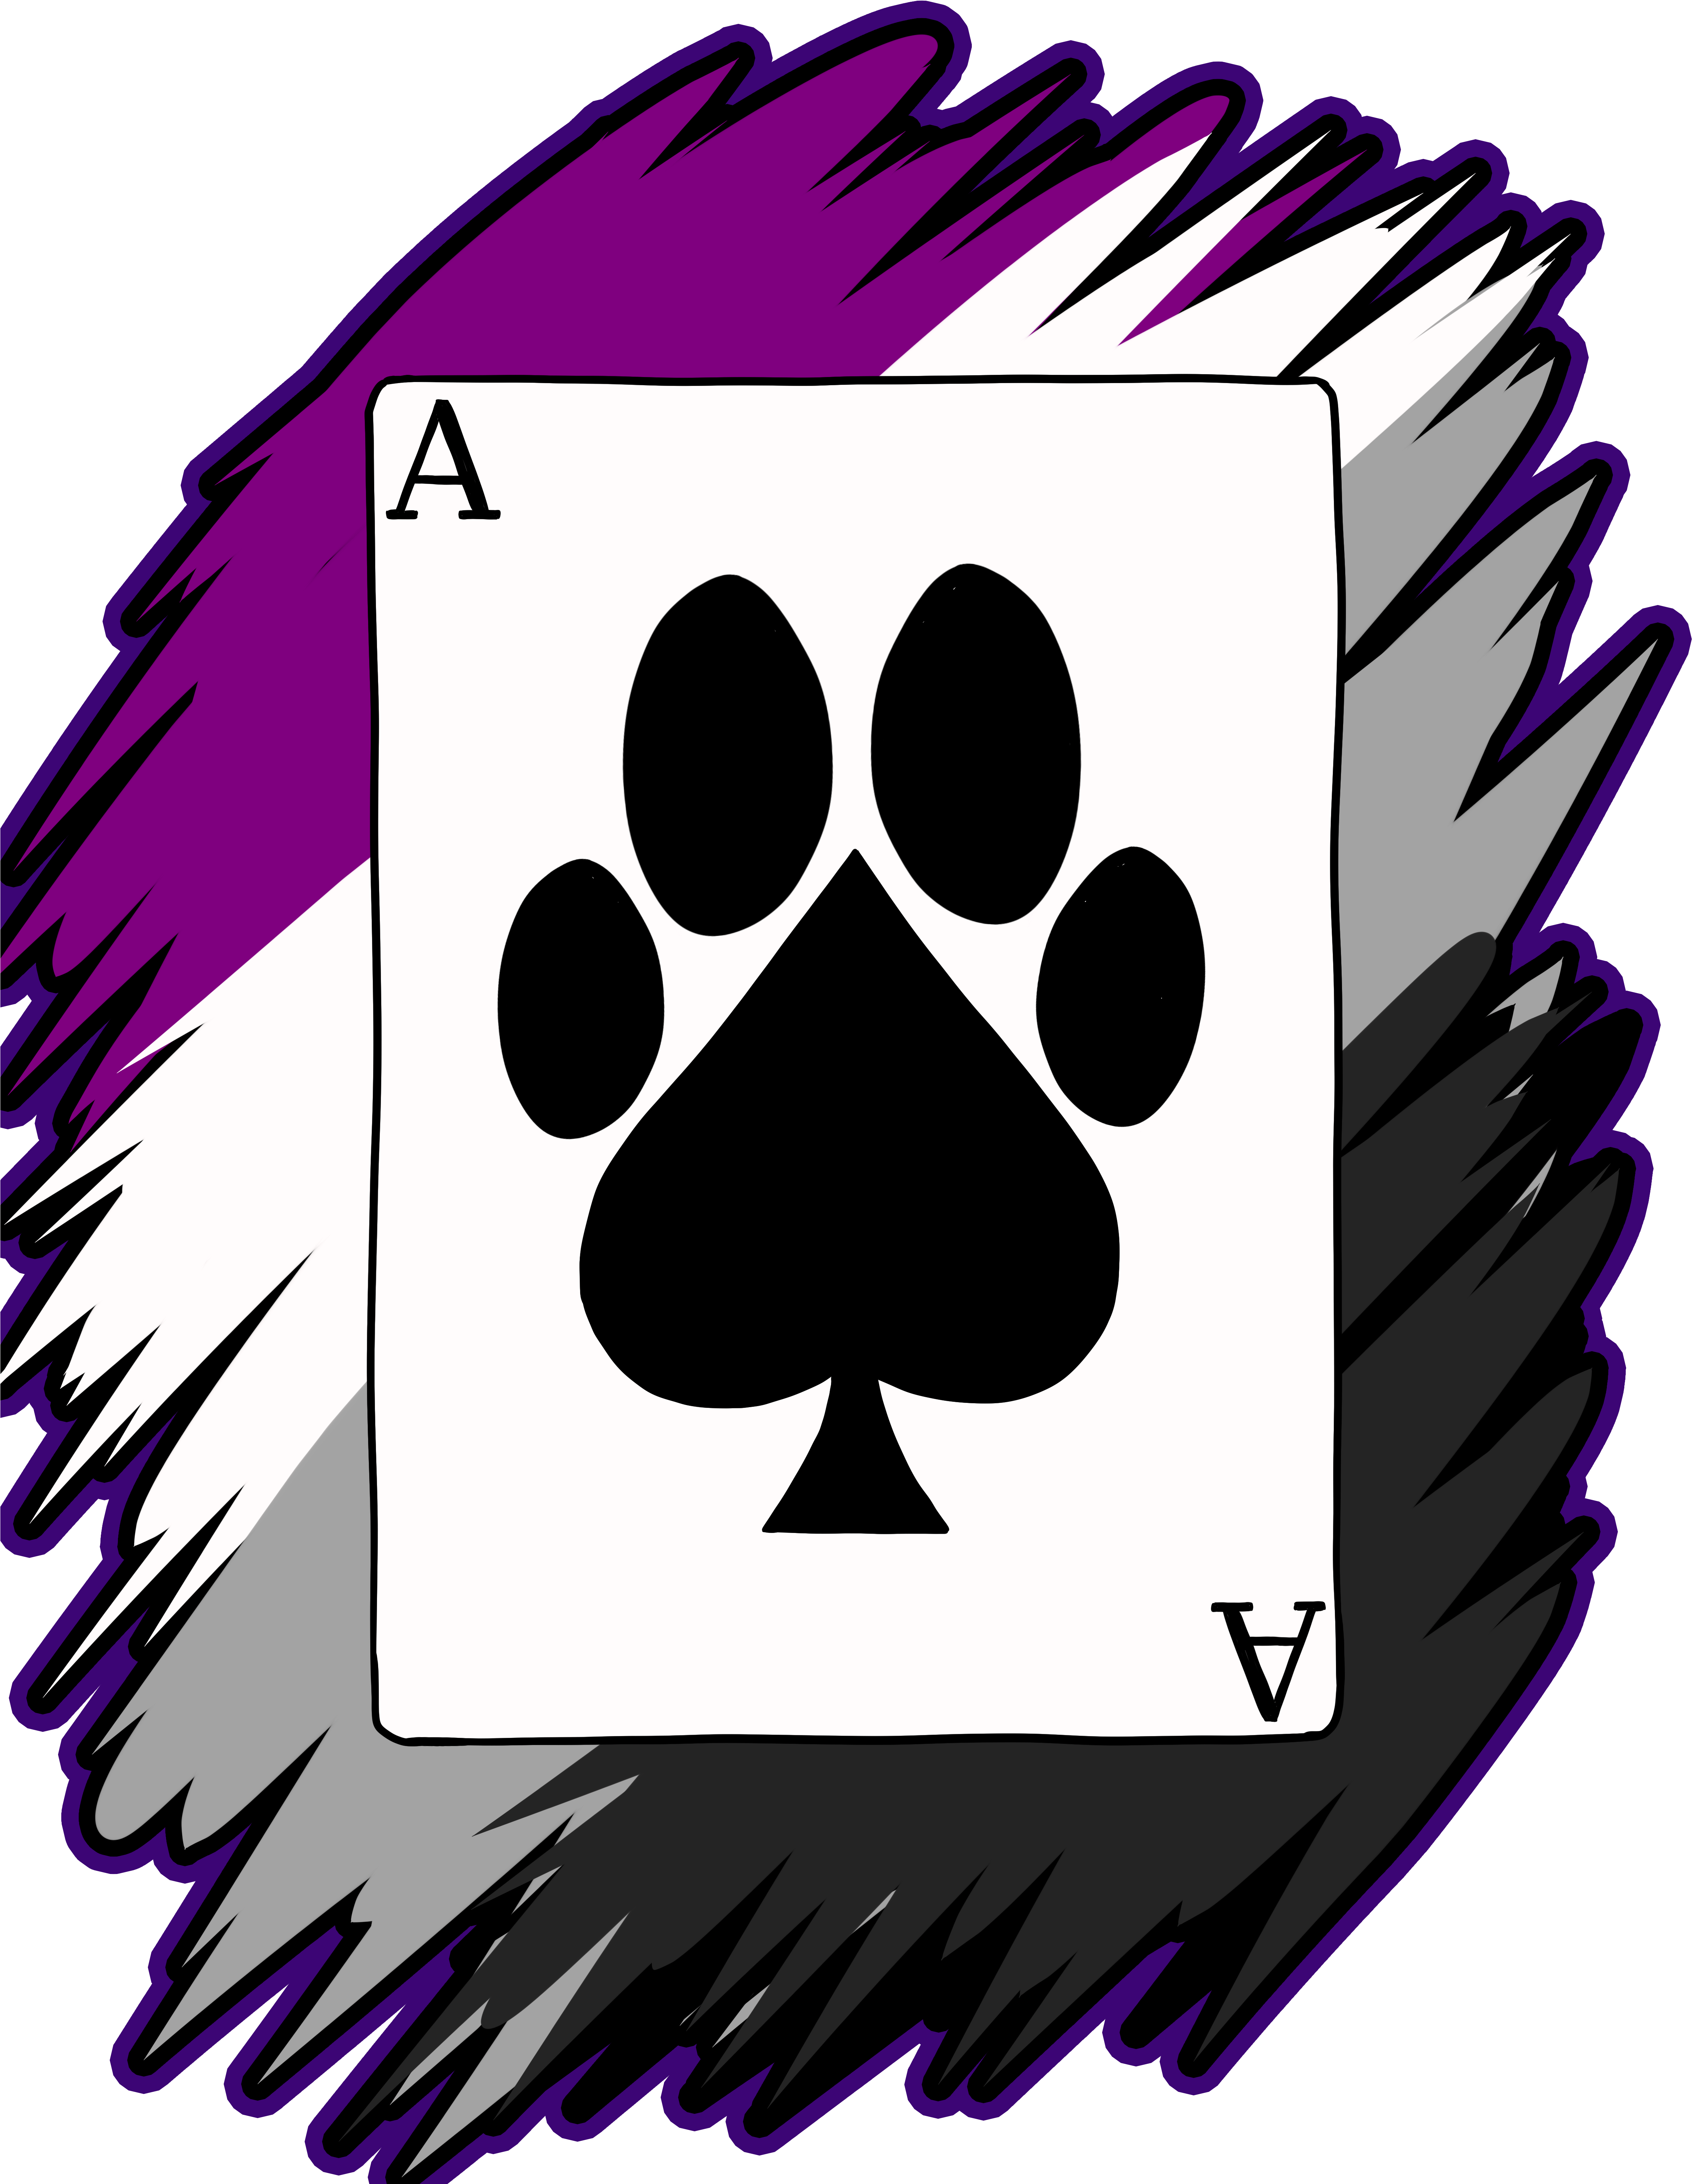 Ace - Ace (4822x6200)